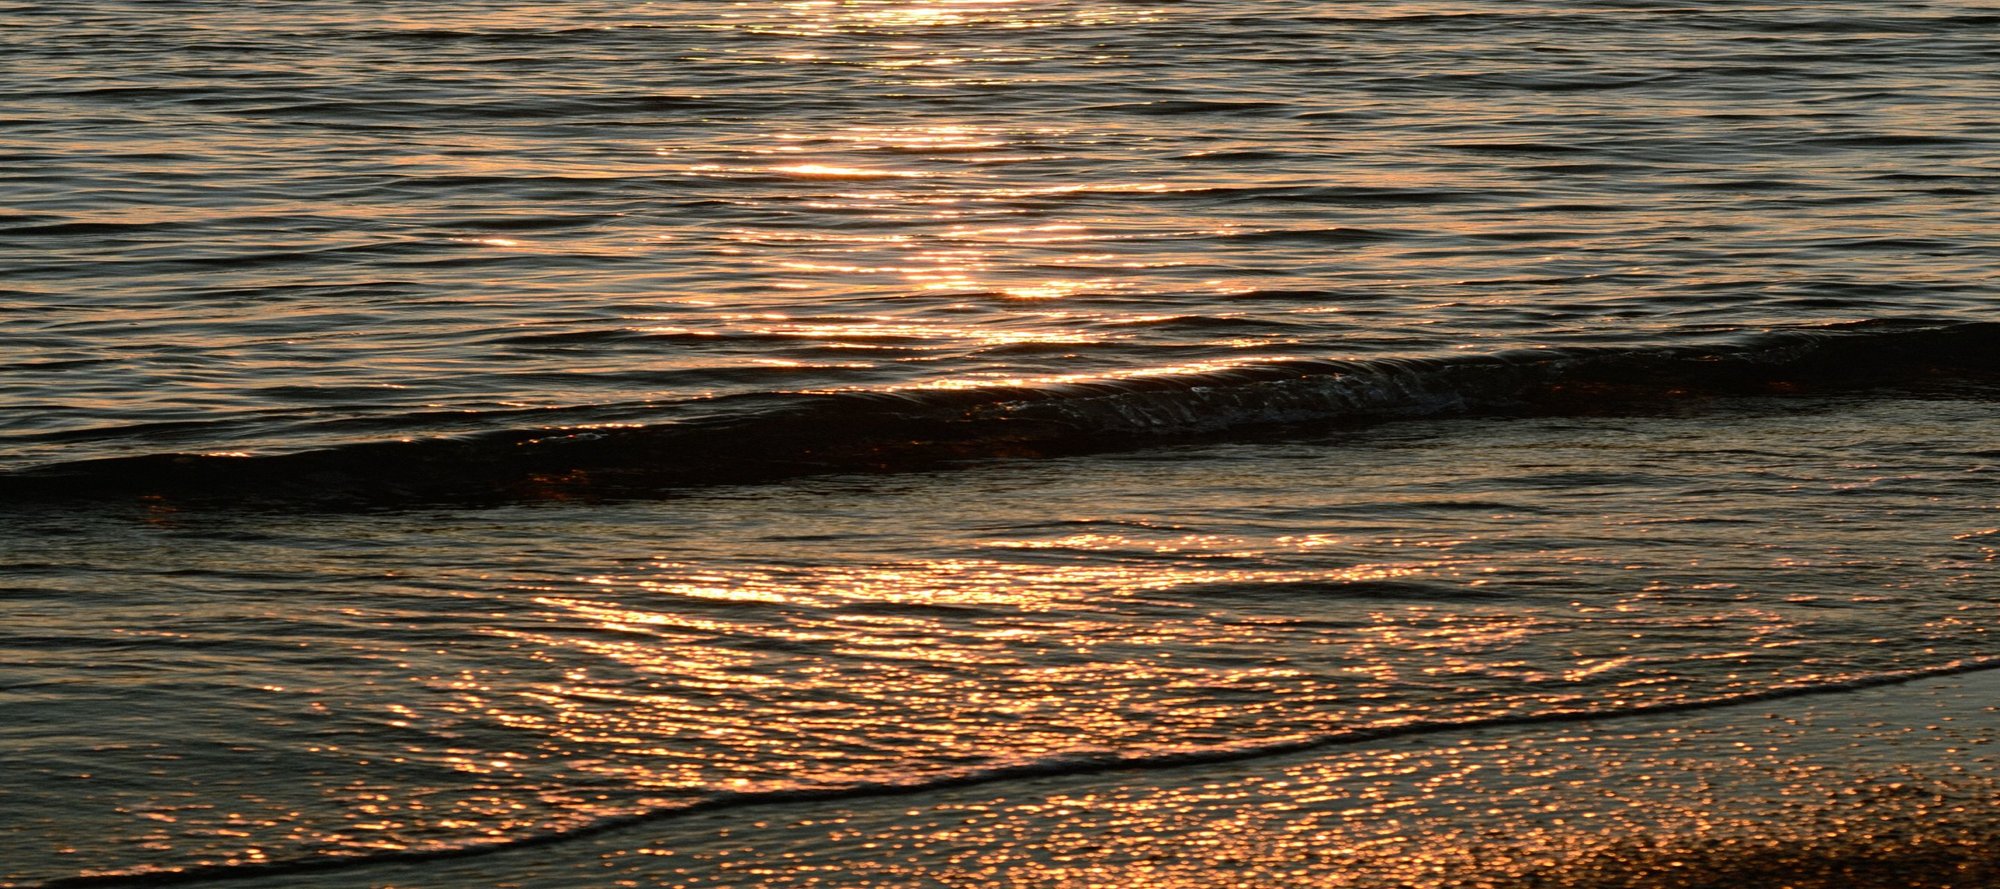 Sunset on calm, rippling ocean waves